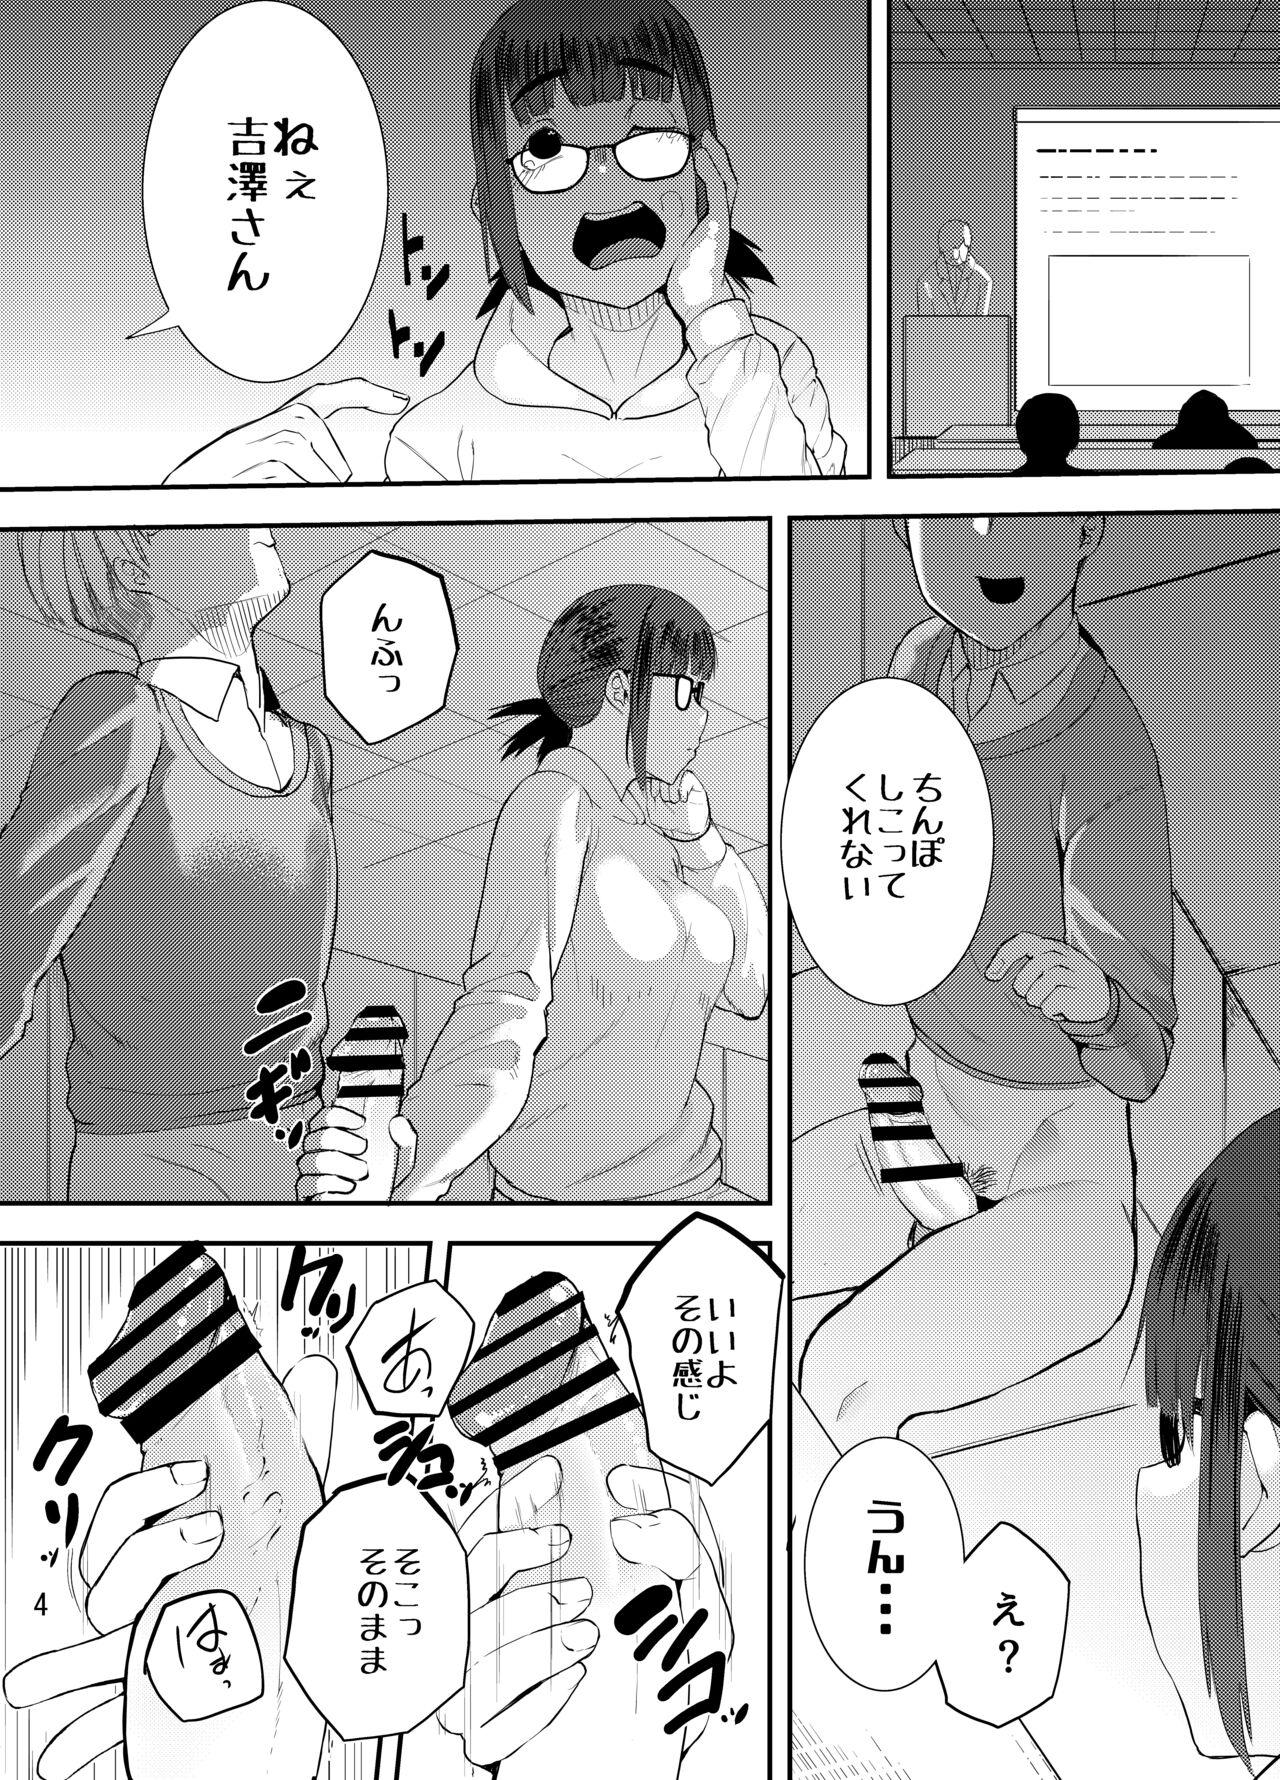 Bottom lend me your pussy, yoshizawa-san - Dasei 67 percent Smooth - Page 5